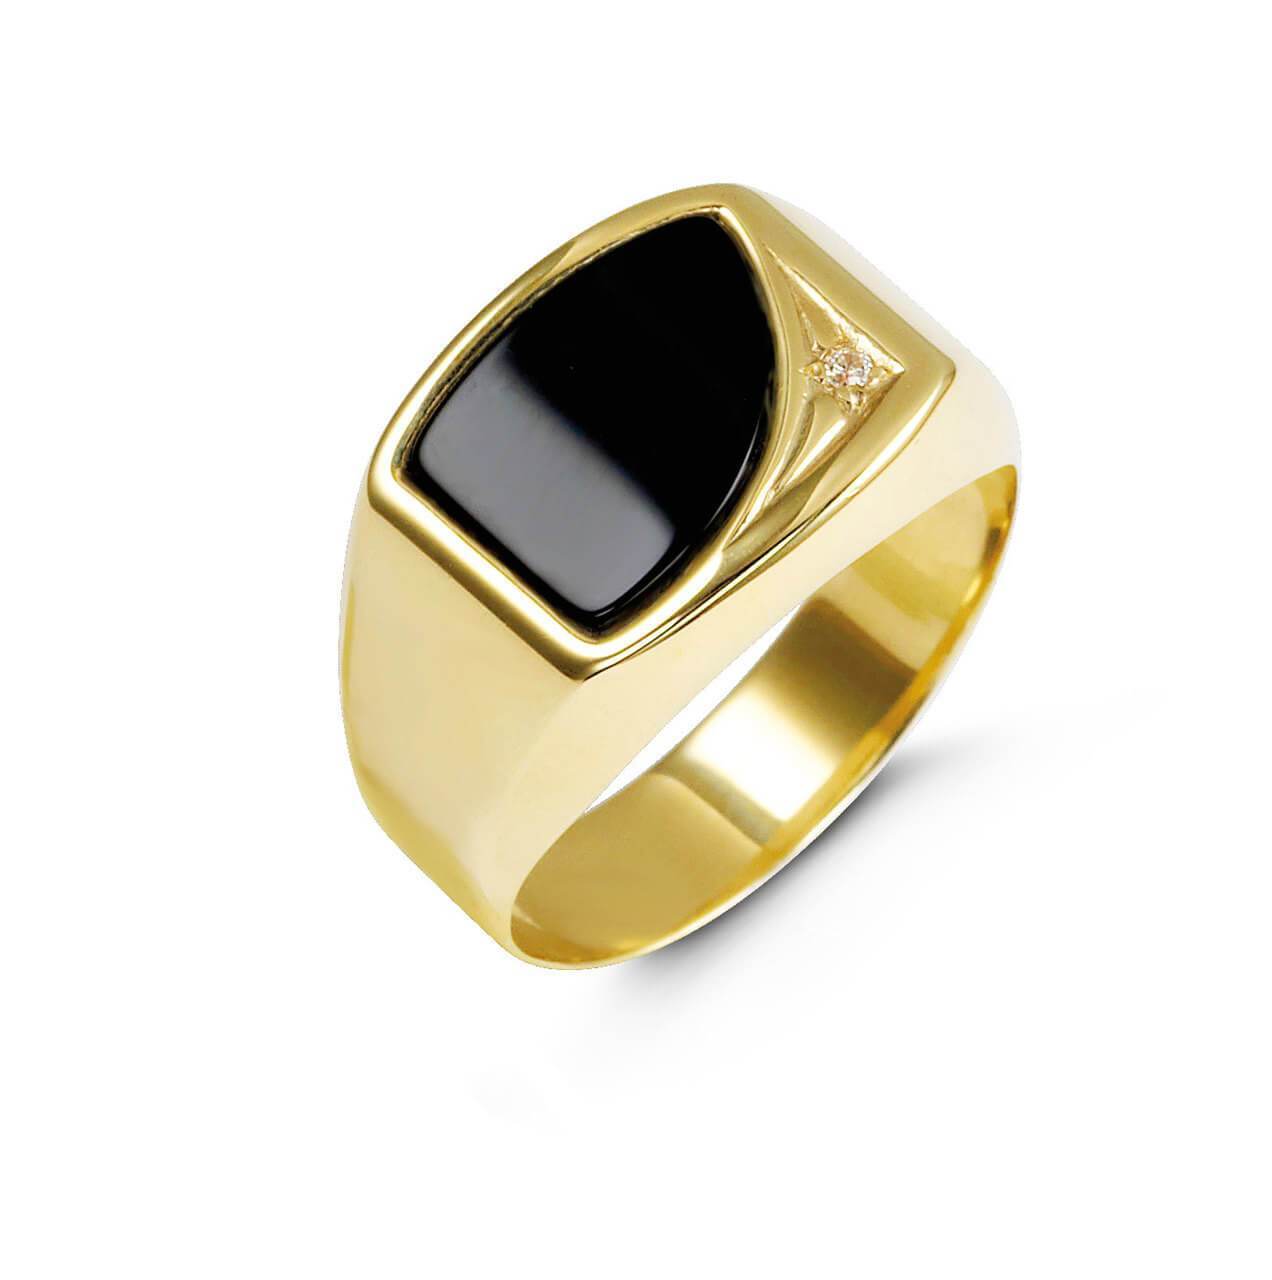 10K Yellow Gold Mens Signet Ring With Black Onyx Stone & CZ Stone